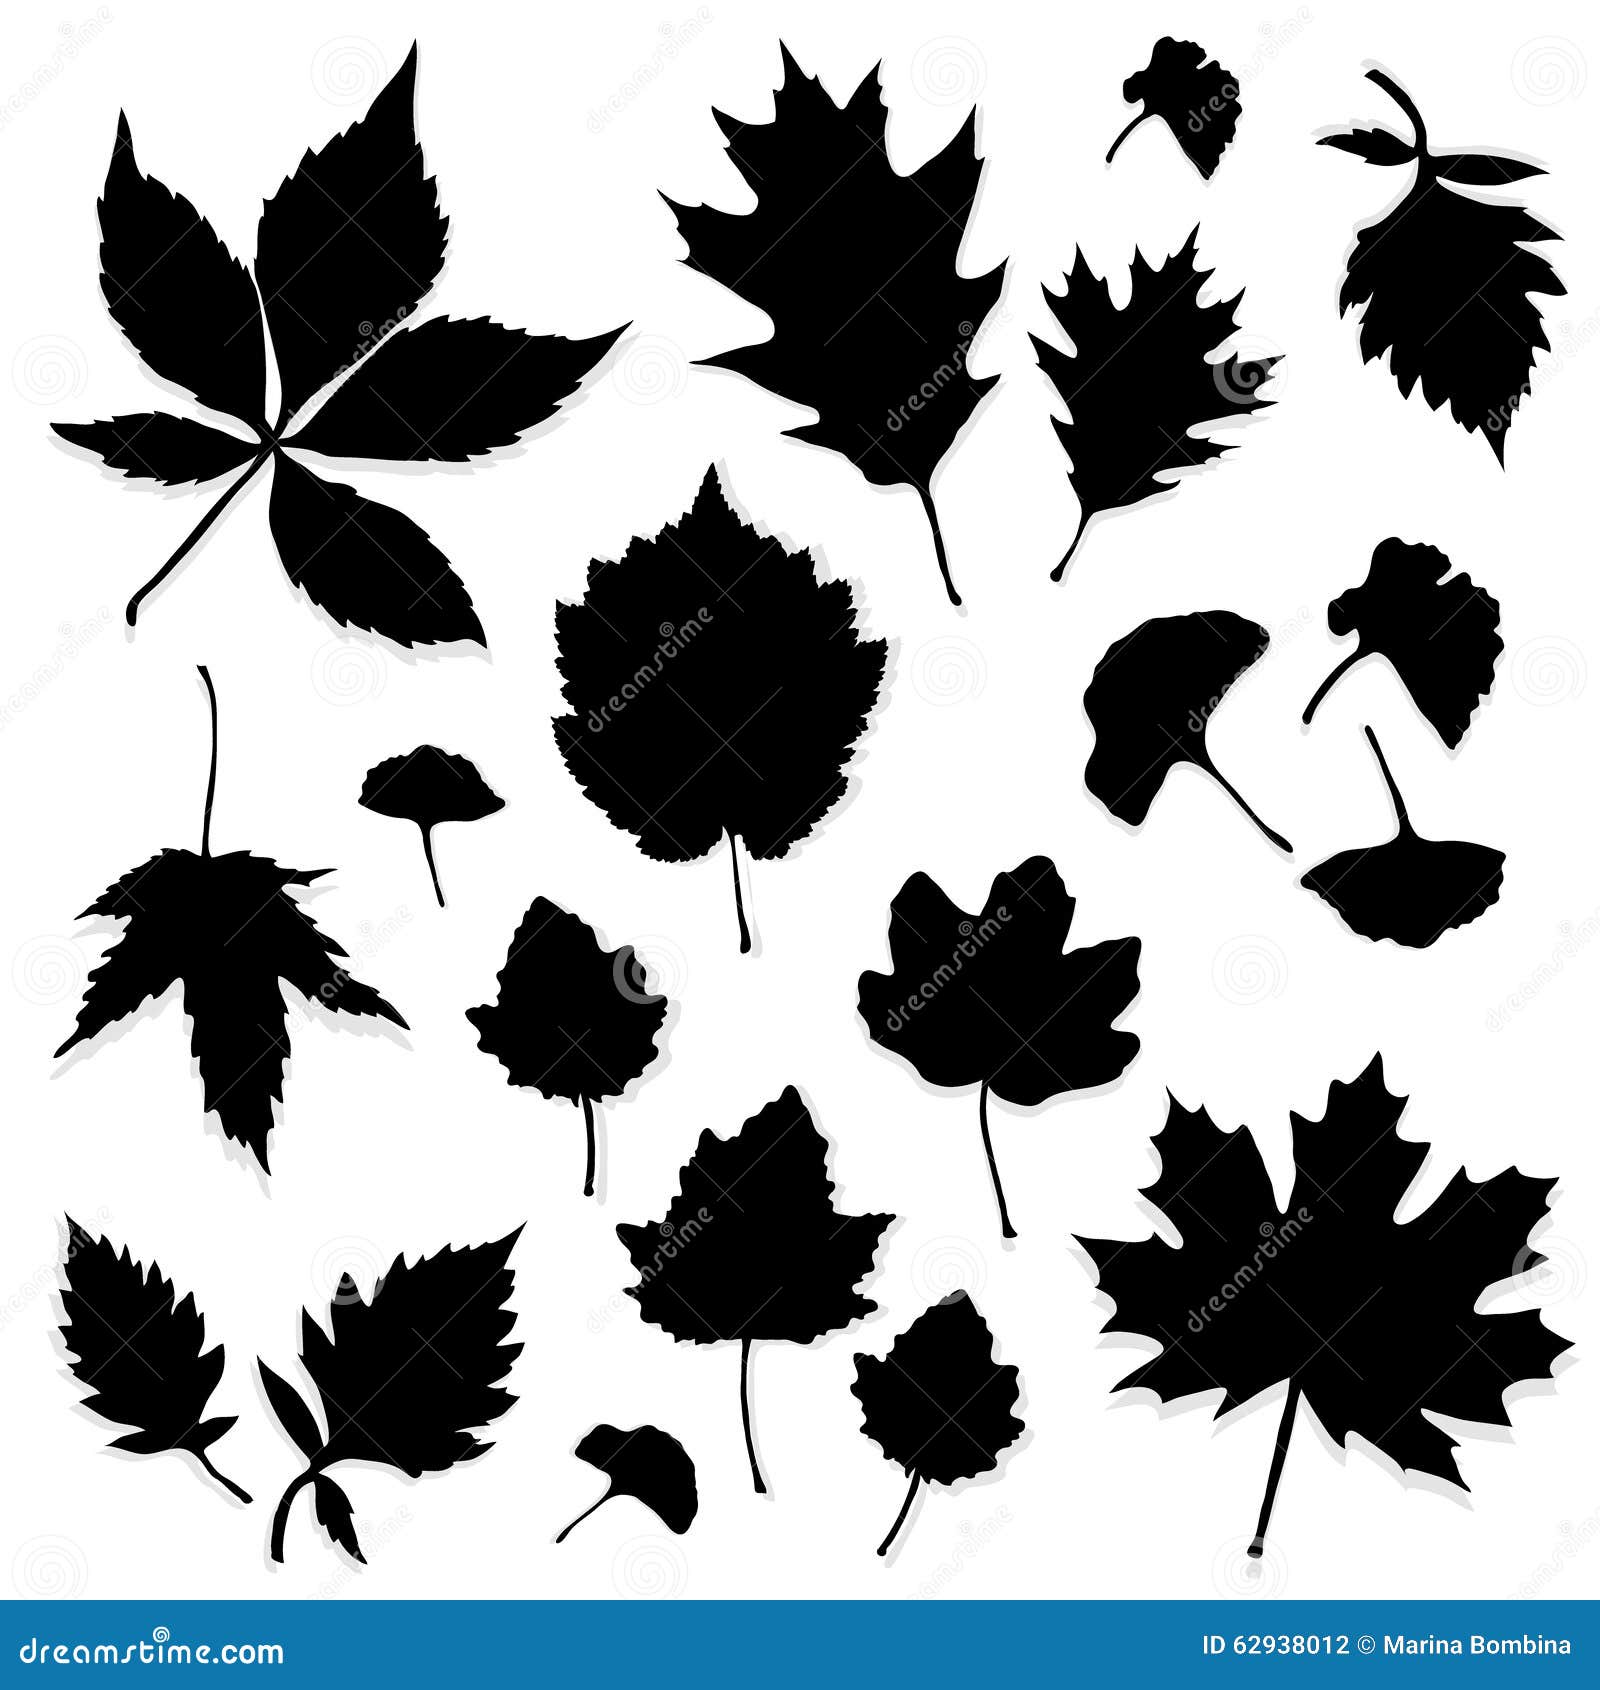 Leaves silhouette stock vector. Illustration of organic - 62938012